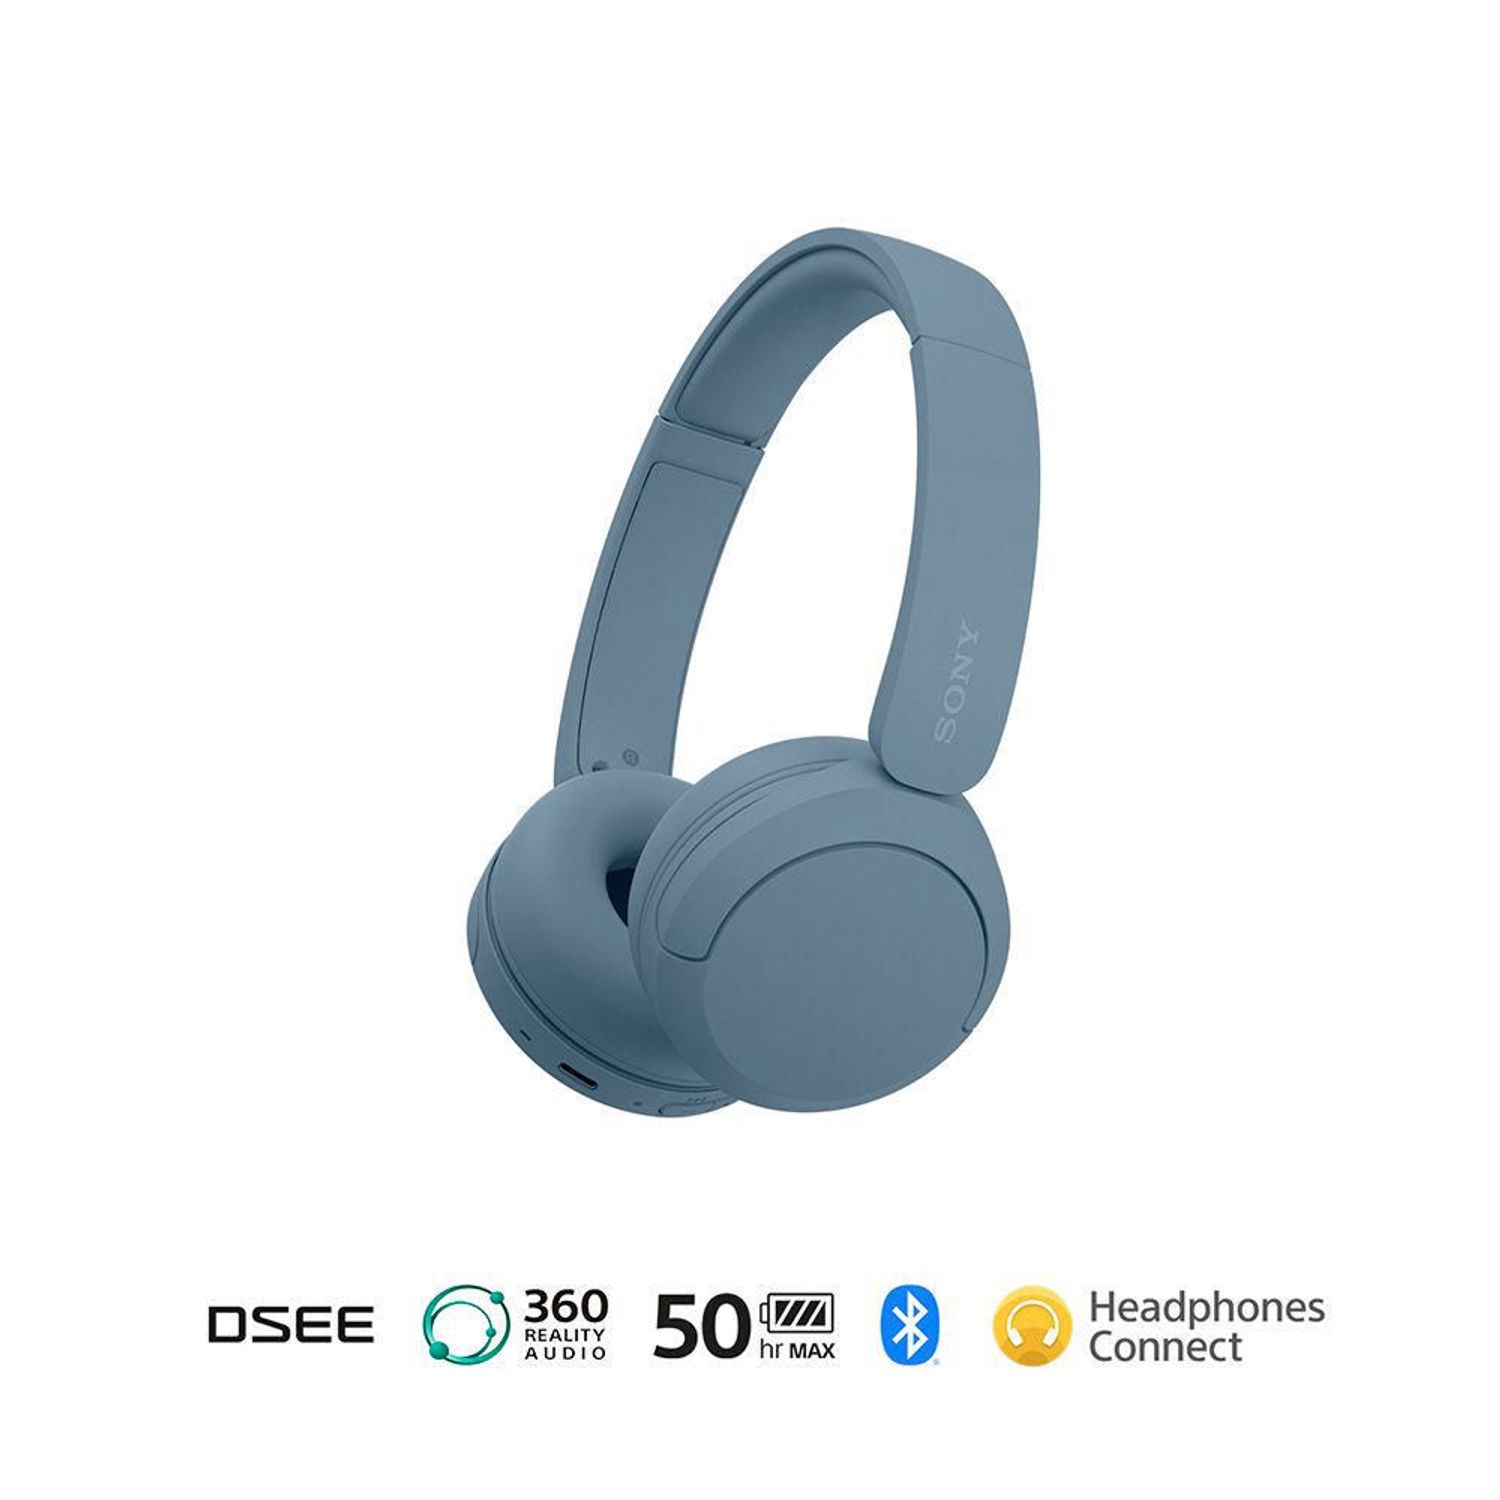 SONY Audífonos Bluetooth Noise Cancelling Wh-1000Xm4 Azul Sony